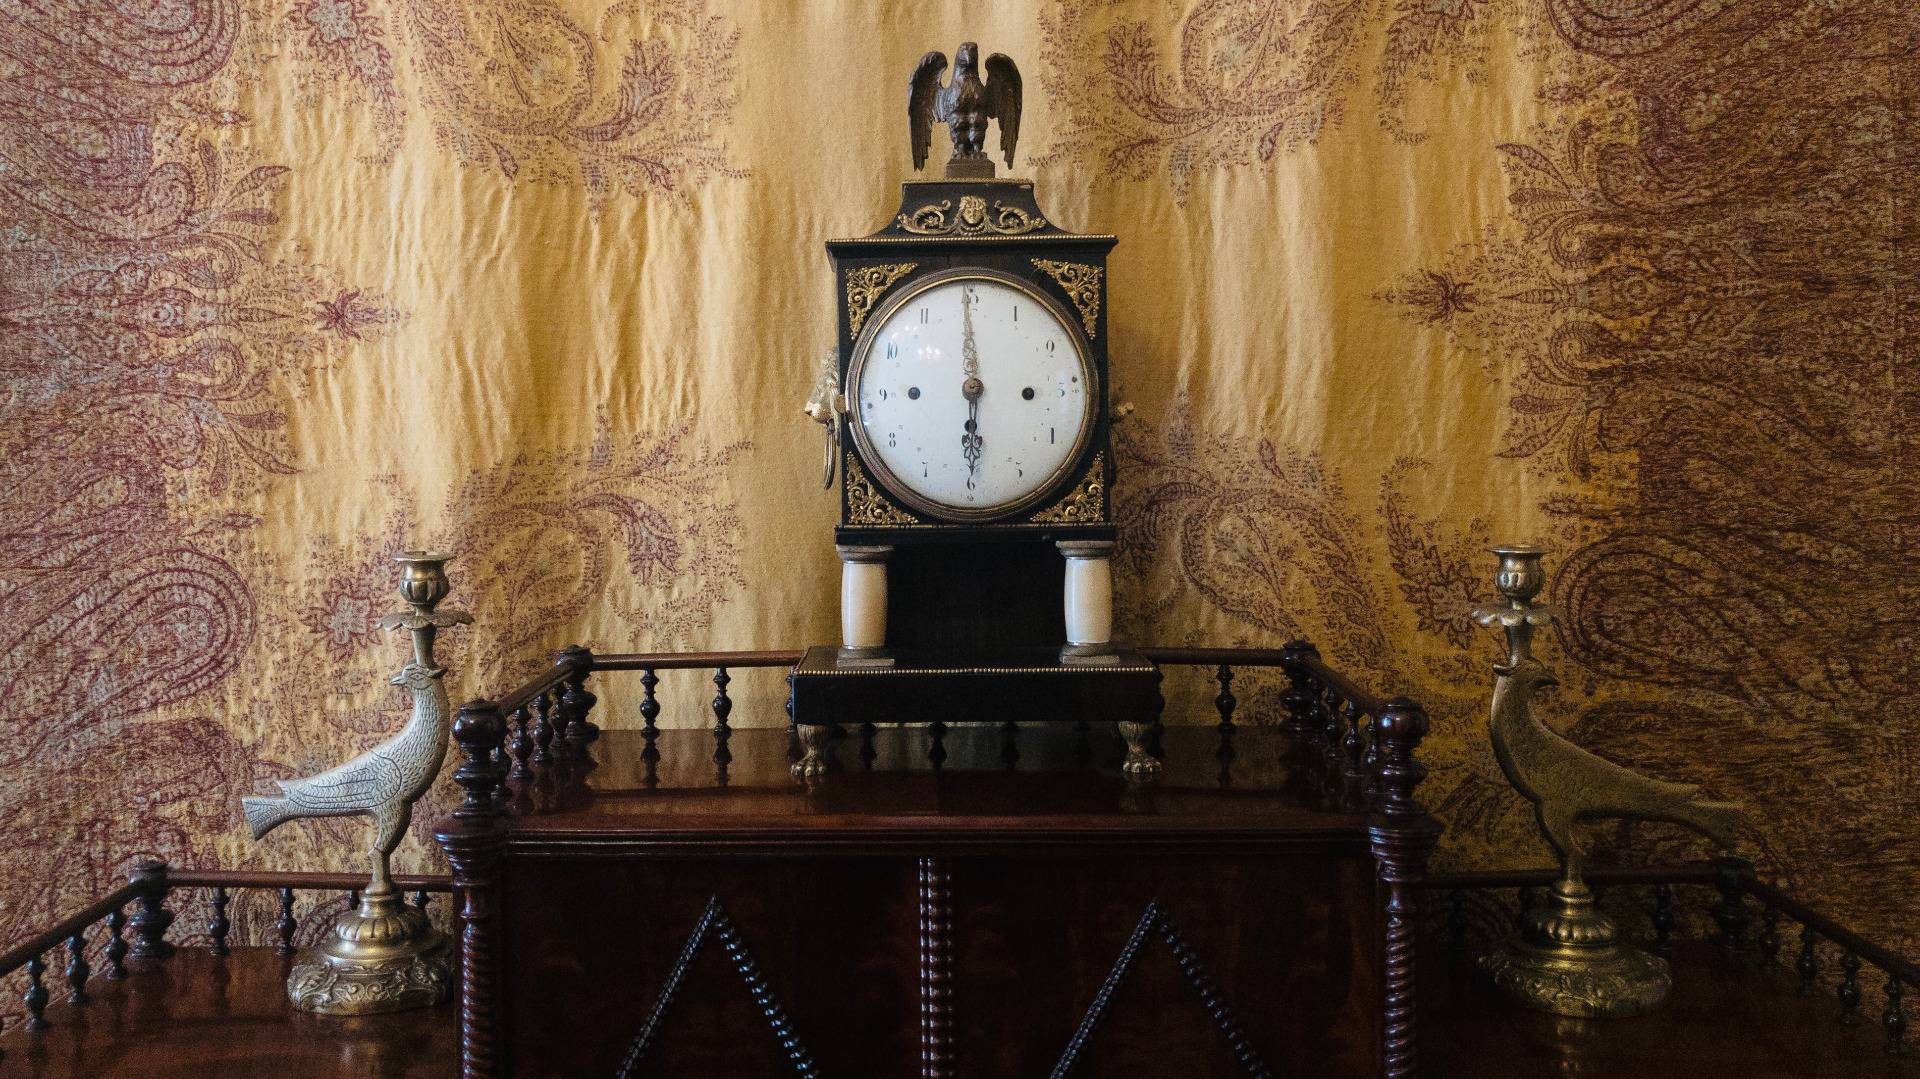 Zegar w saloniku / The clock in the lounge